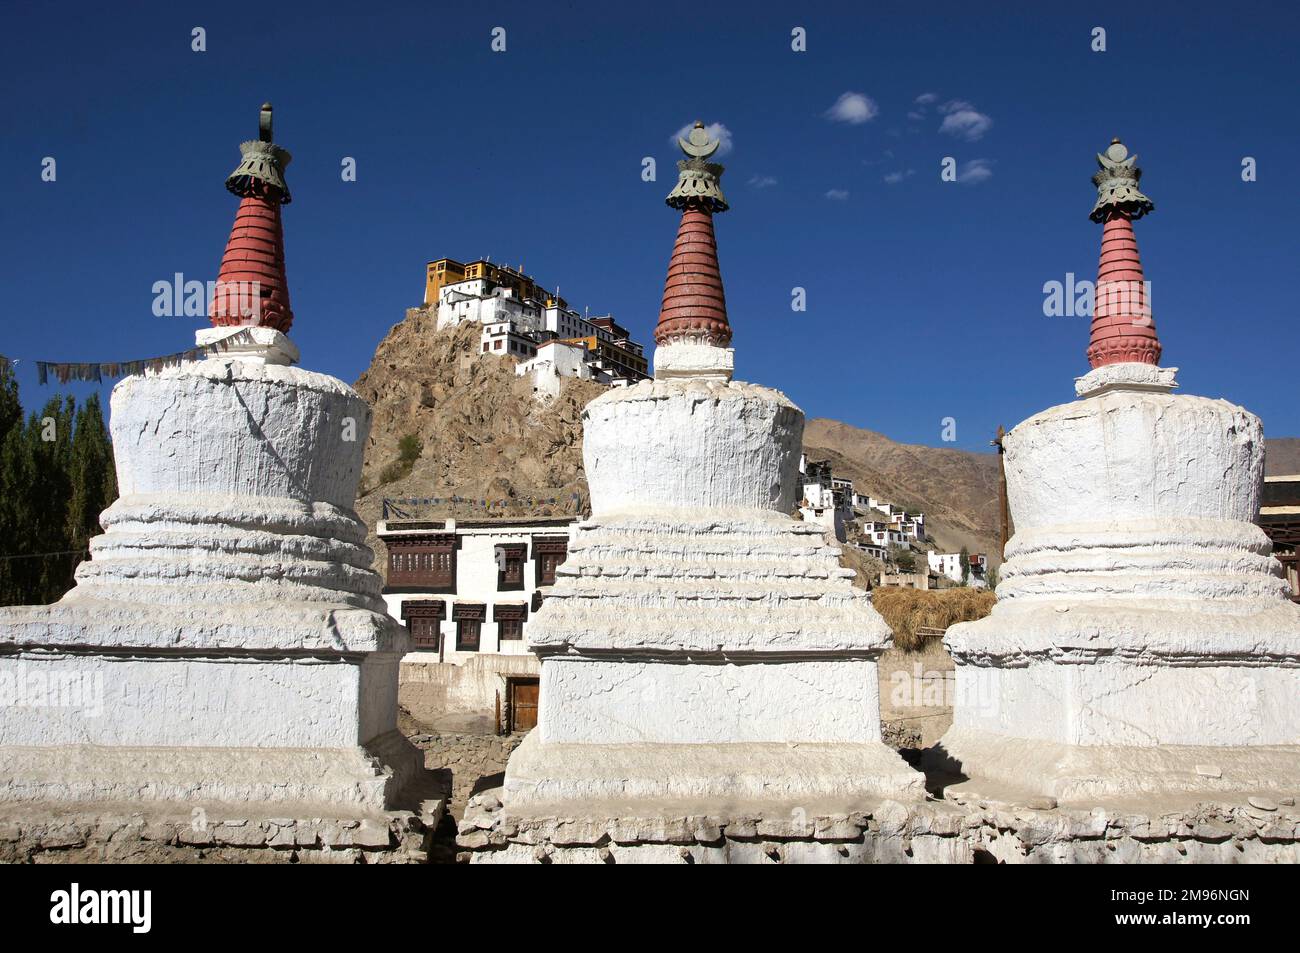 India, Jammu and Kashmir, Ladakh, Thiksey: Chorten, monastry at rear. Stock Photo